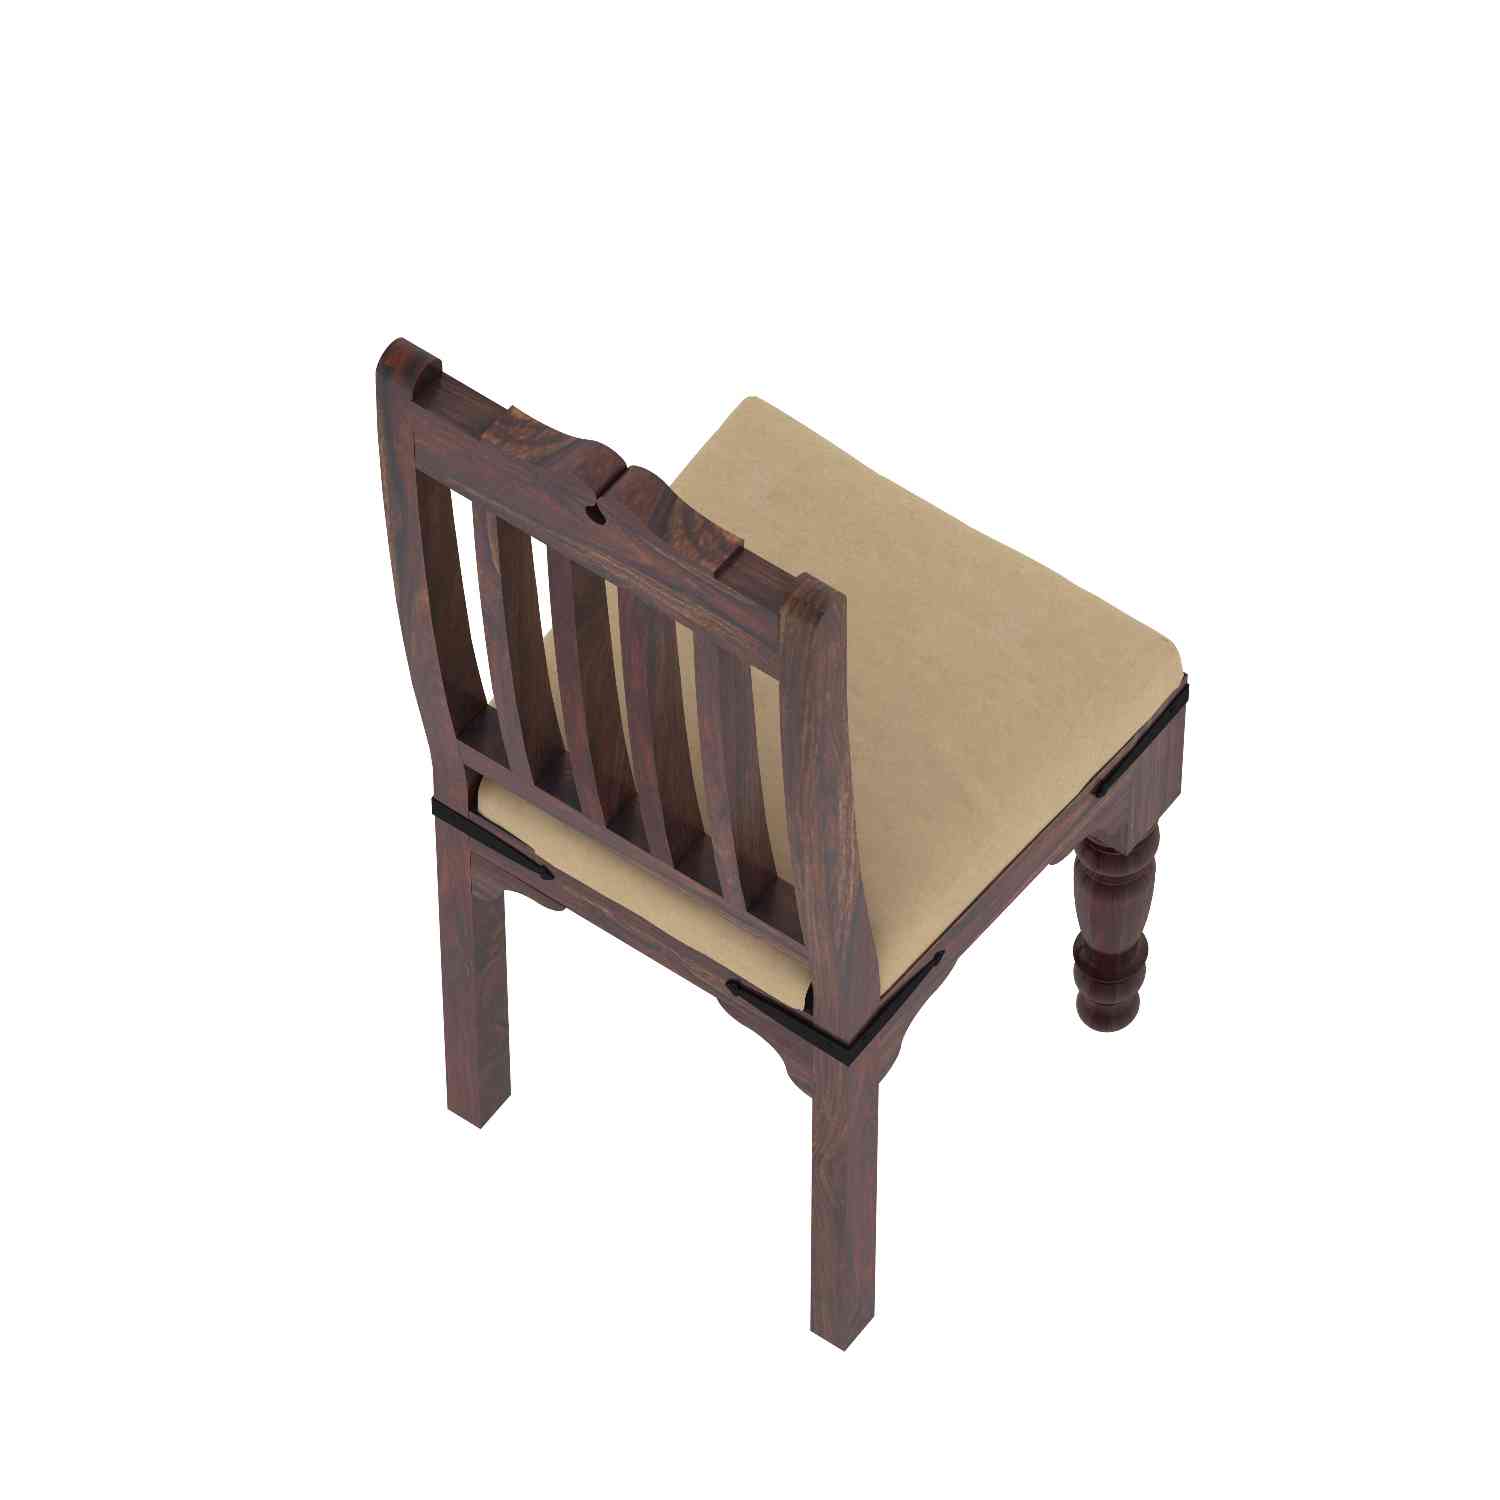 Ajmer Solid Sheesham Wood 6 Seater Dining Set (With Cushion, Walnut Finish)